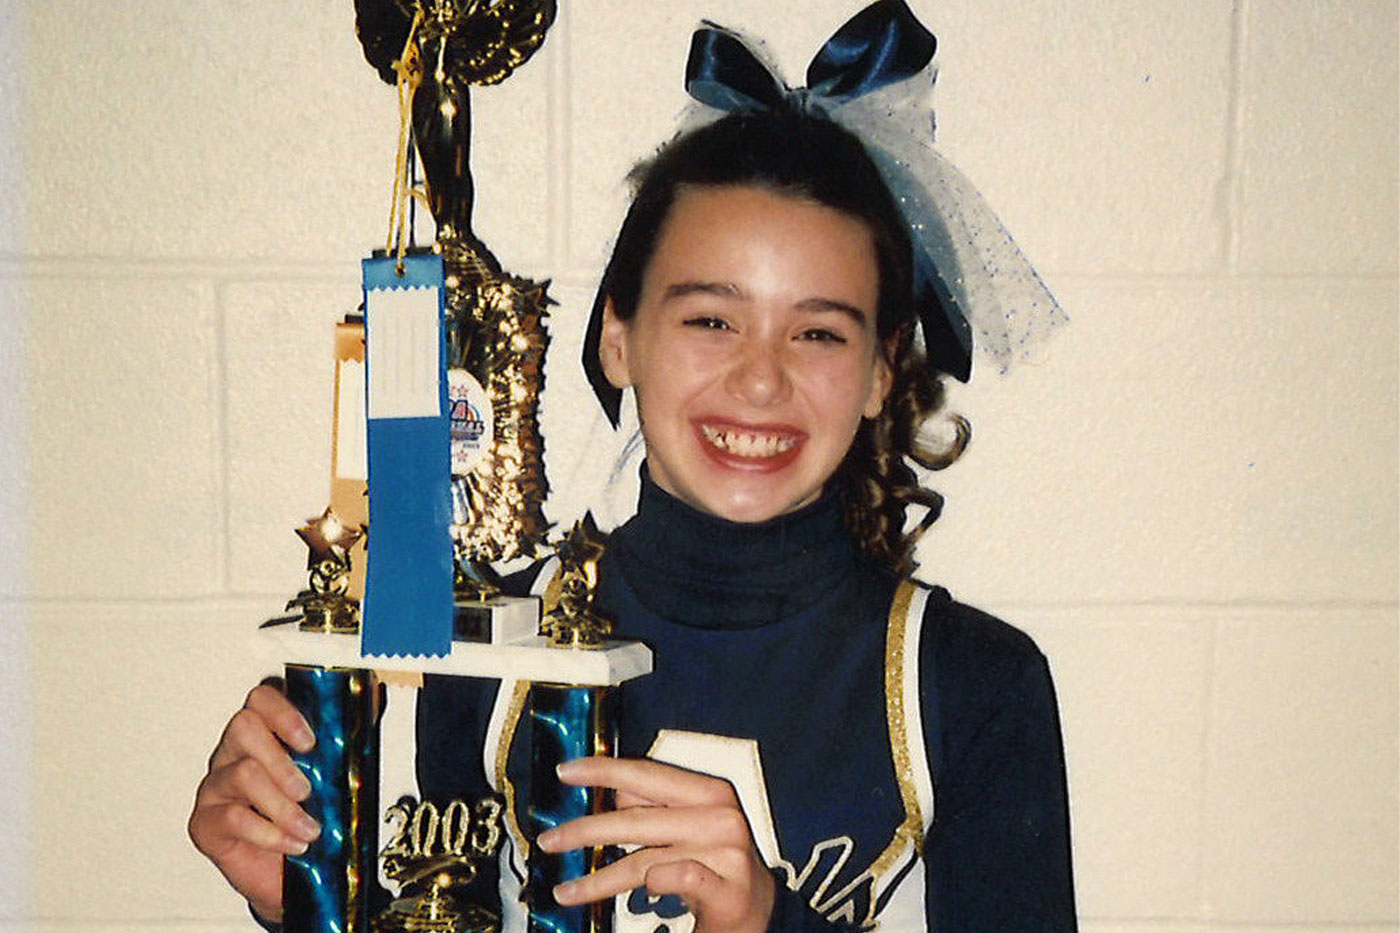 Megan Sprague holding a trophy